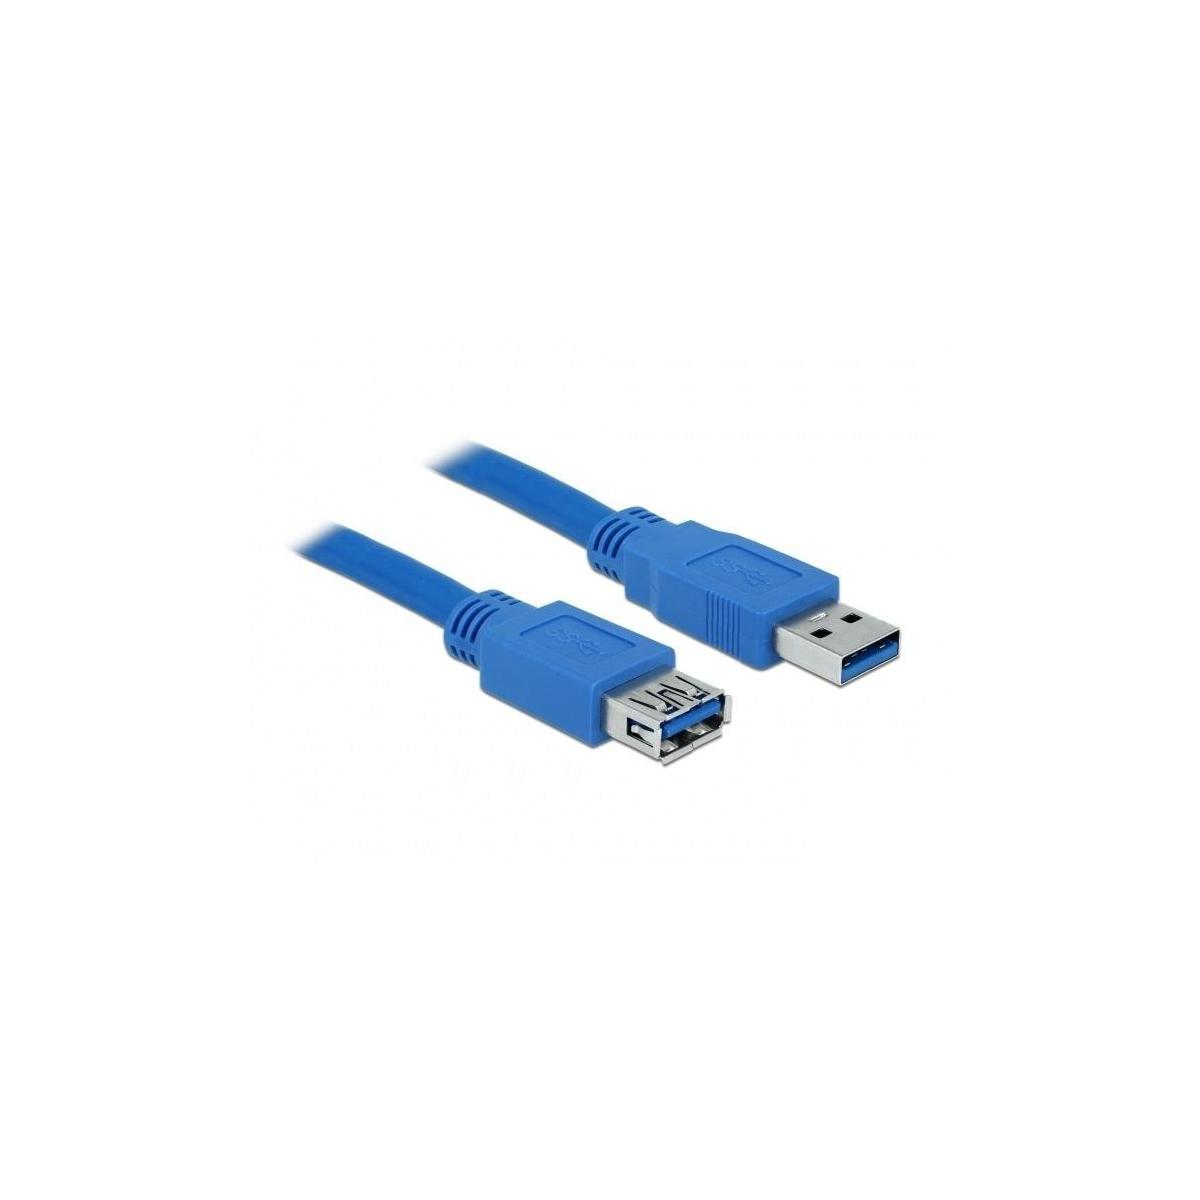 DELOCK DELOCK Kabel & A/A Peripheriegeräte Kabel, mehrfarbig USB 3.0 USB 5mSt/B Zubehör Verlaeng